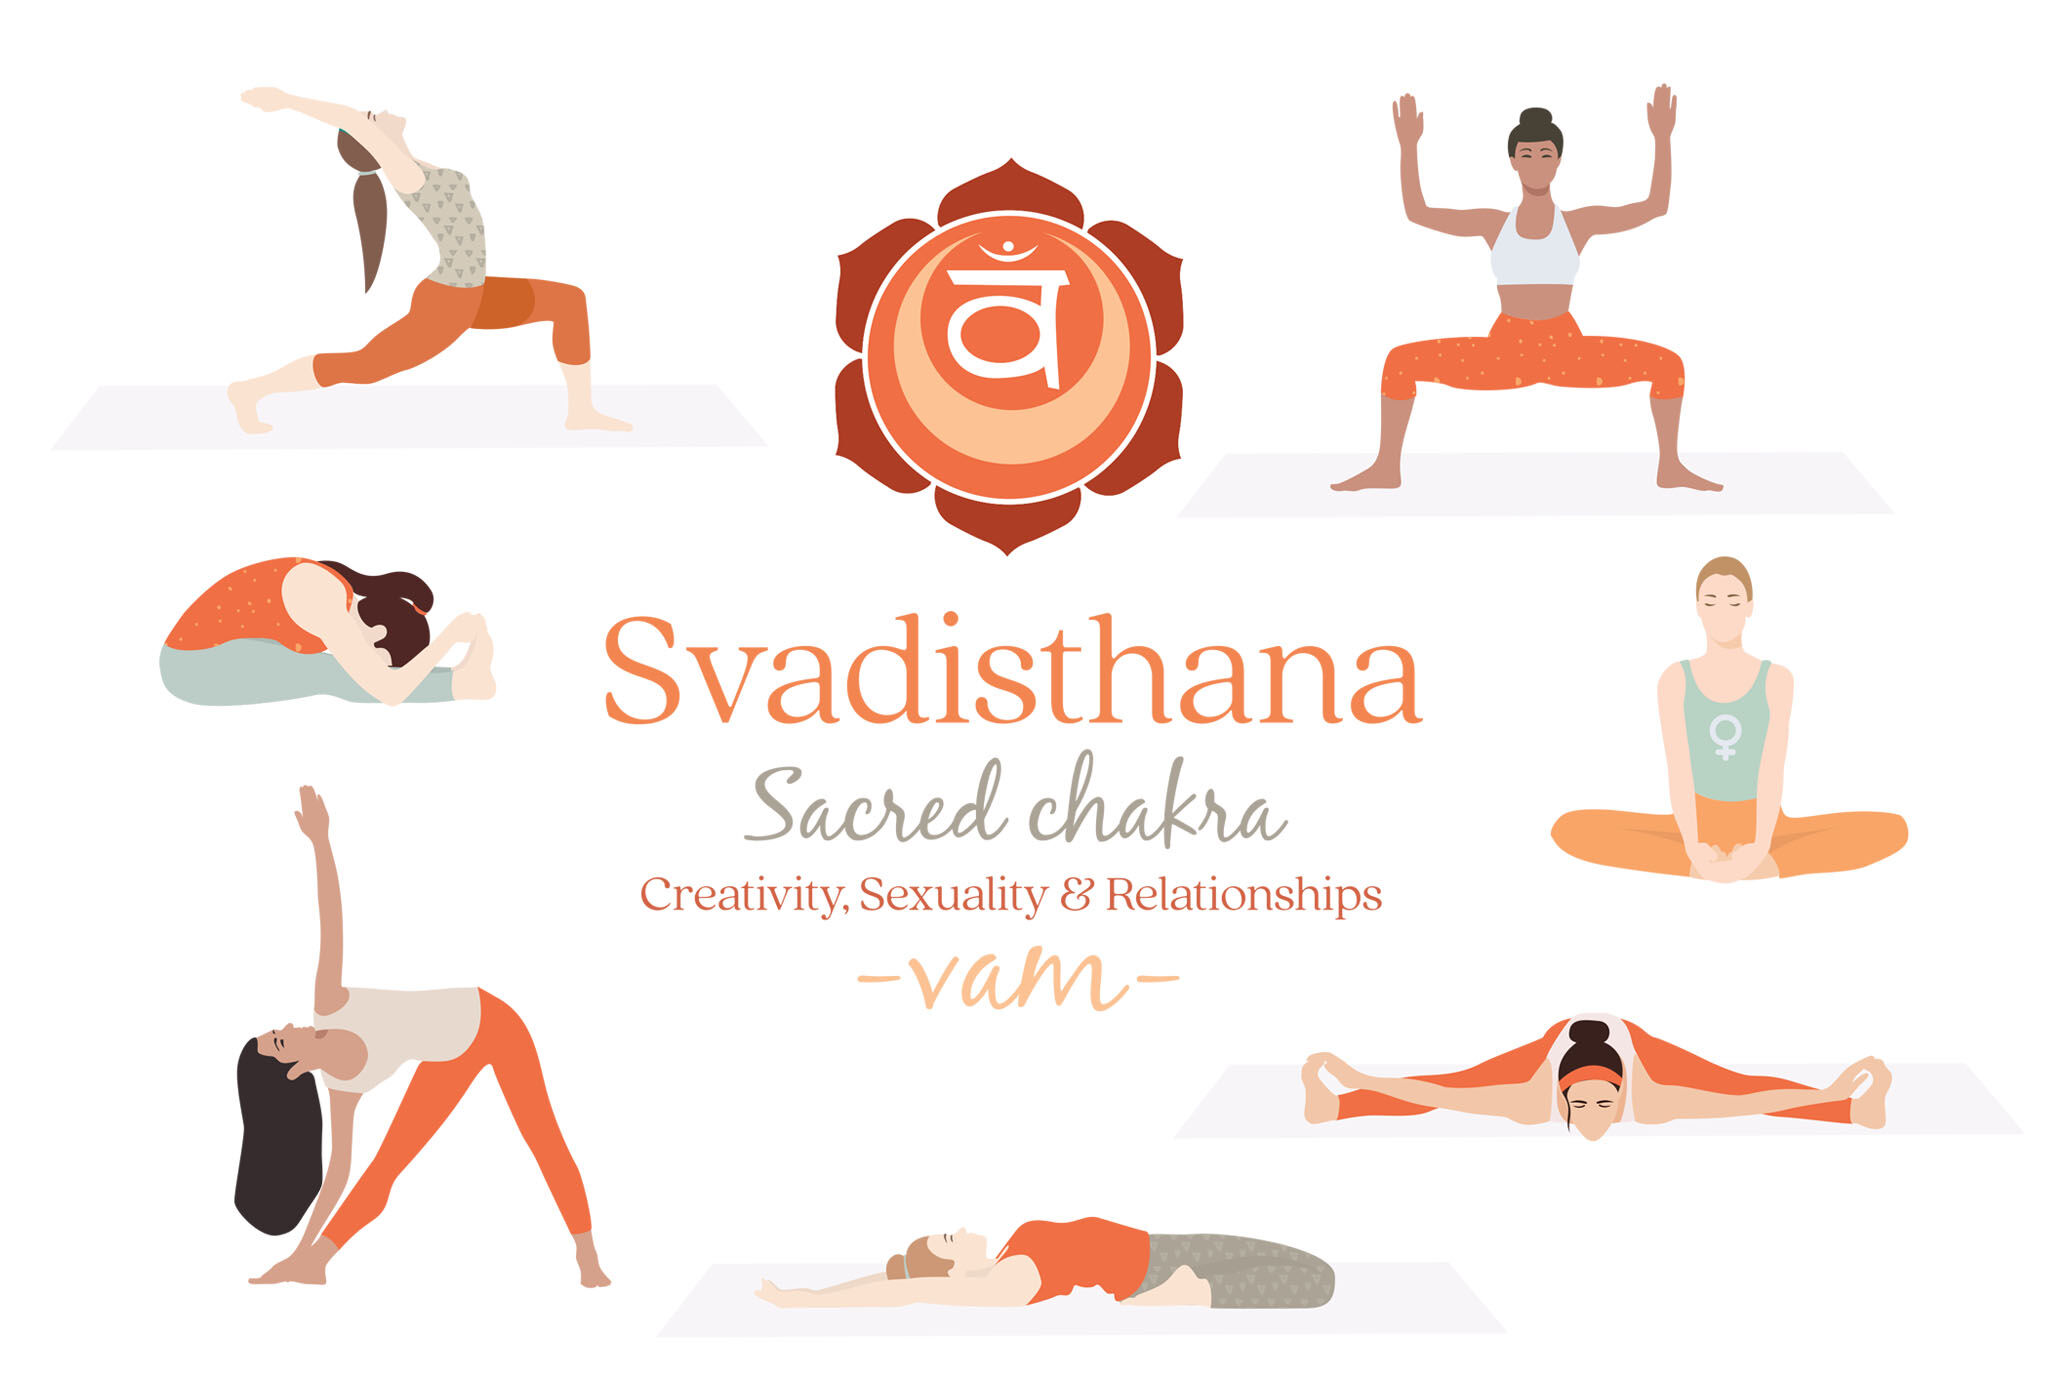 Yoga To Balance Your Sacral Chakra Bija Mantra and Asanas - The Joy Within